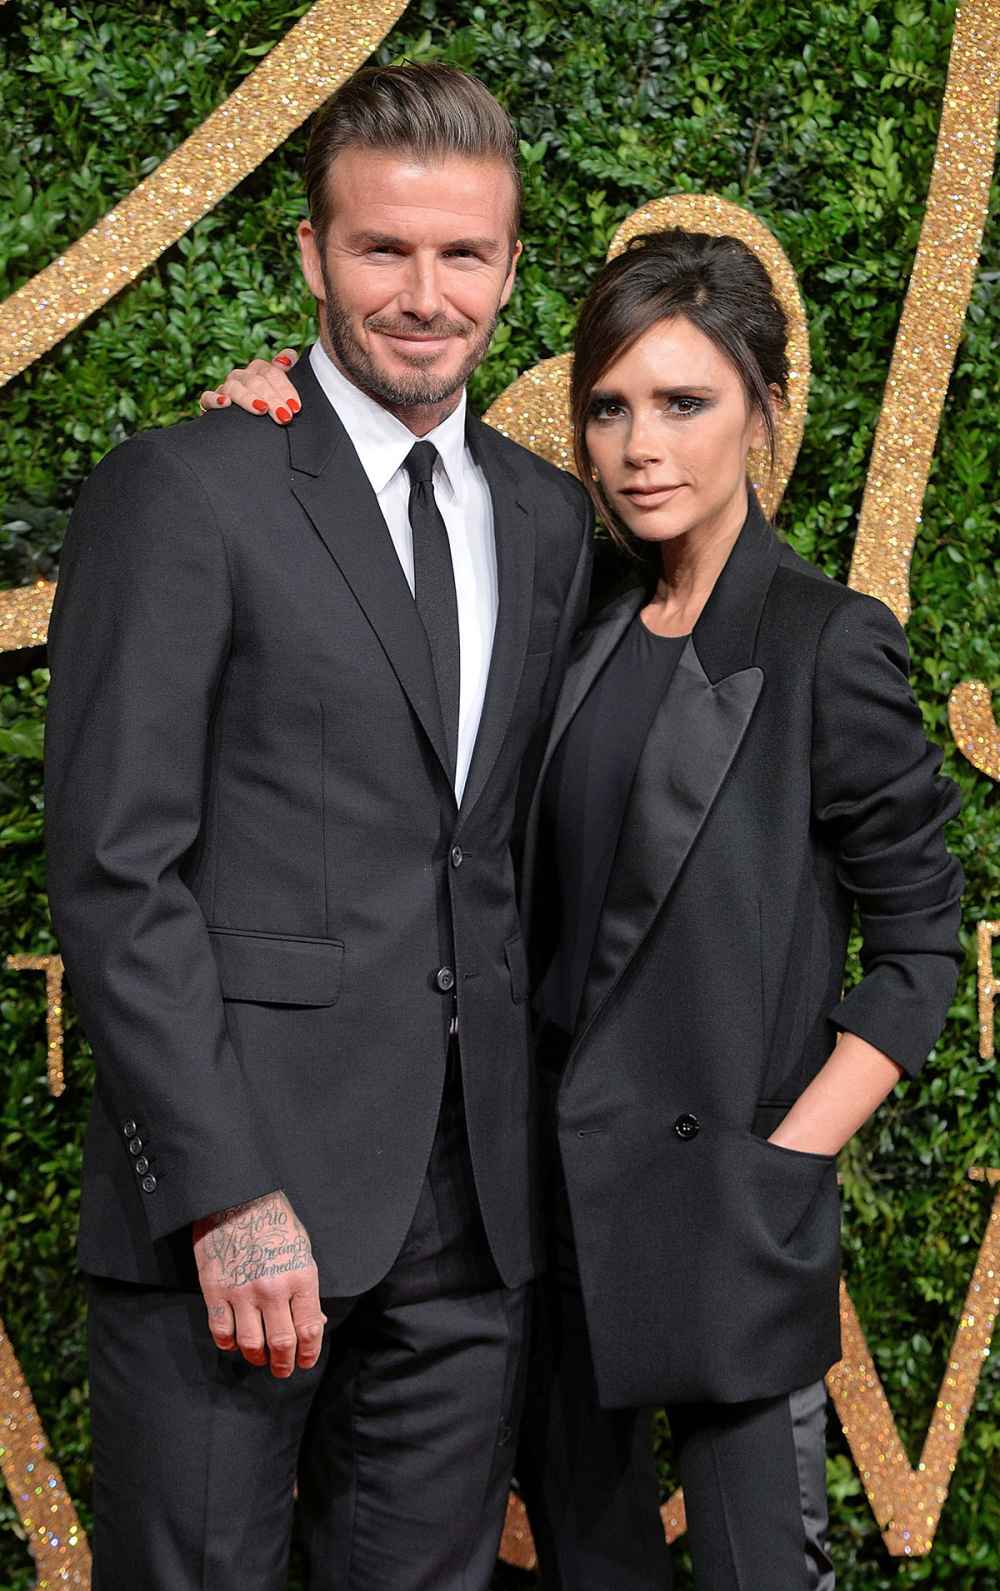 David Beckham and Victoria Beckham attend the British Fashion Awards 2015 at London Coliseum on November 23, 2015 in London, England